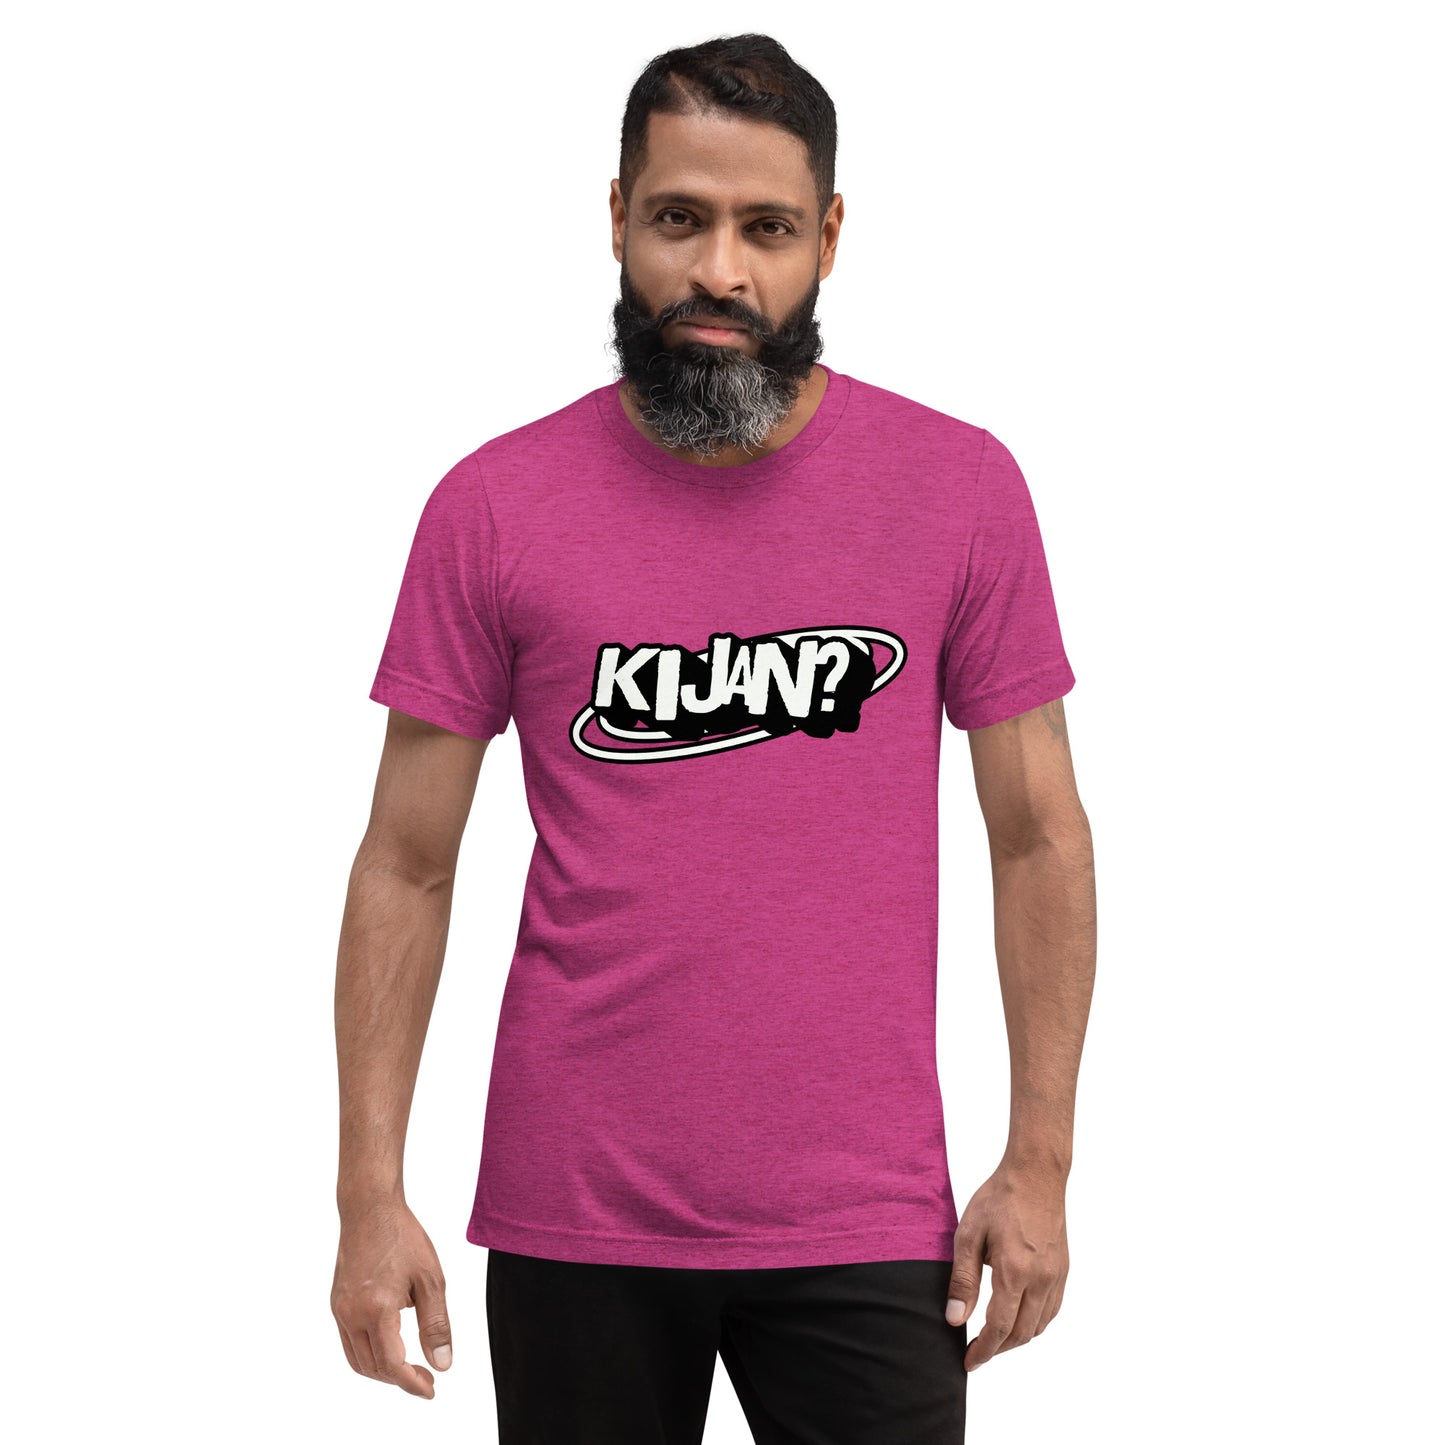 KIJAN Short sleeve t-shirt